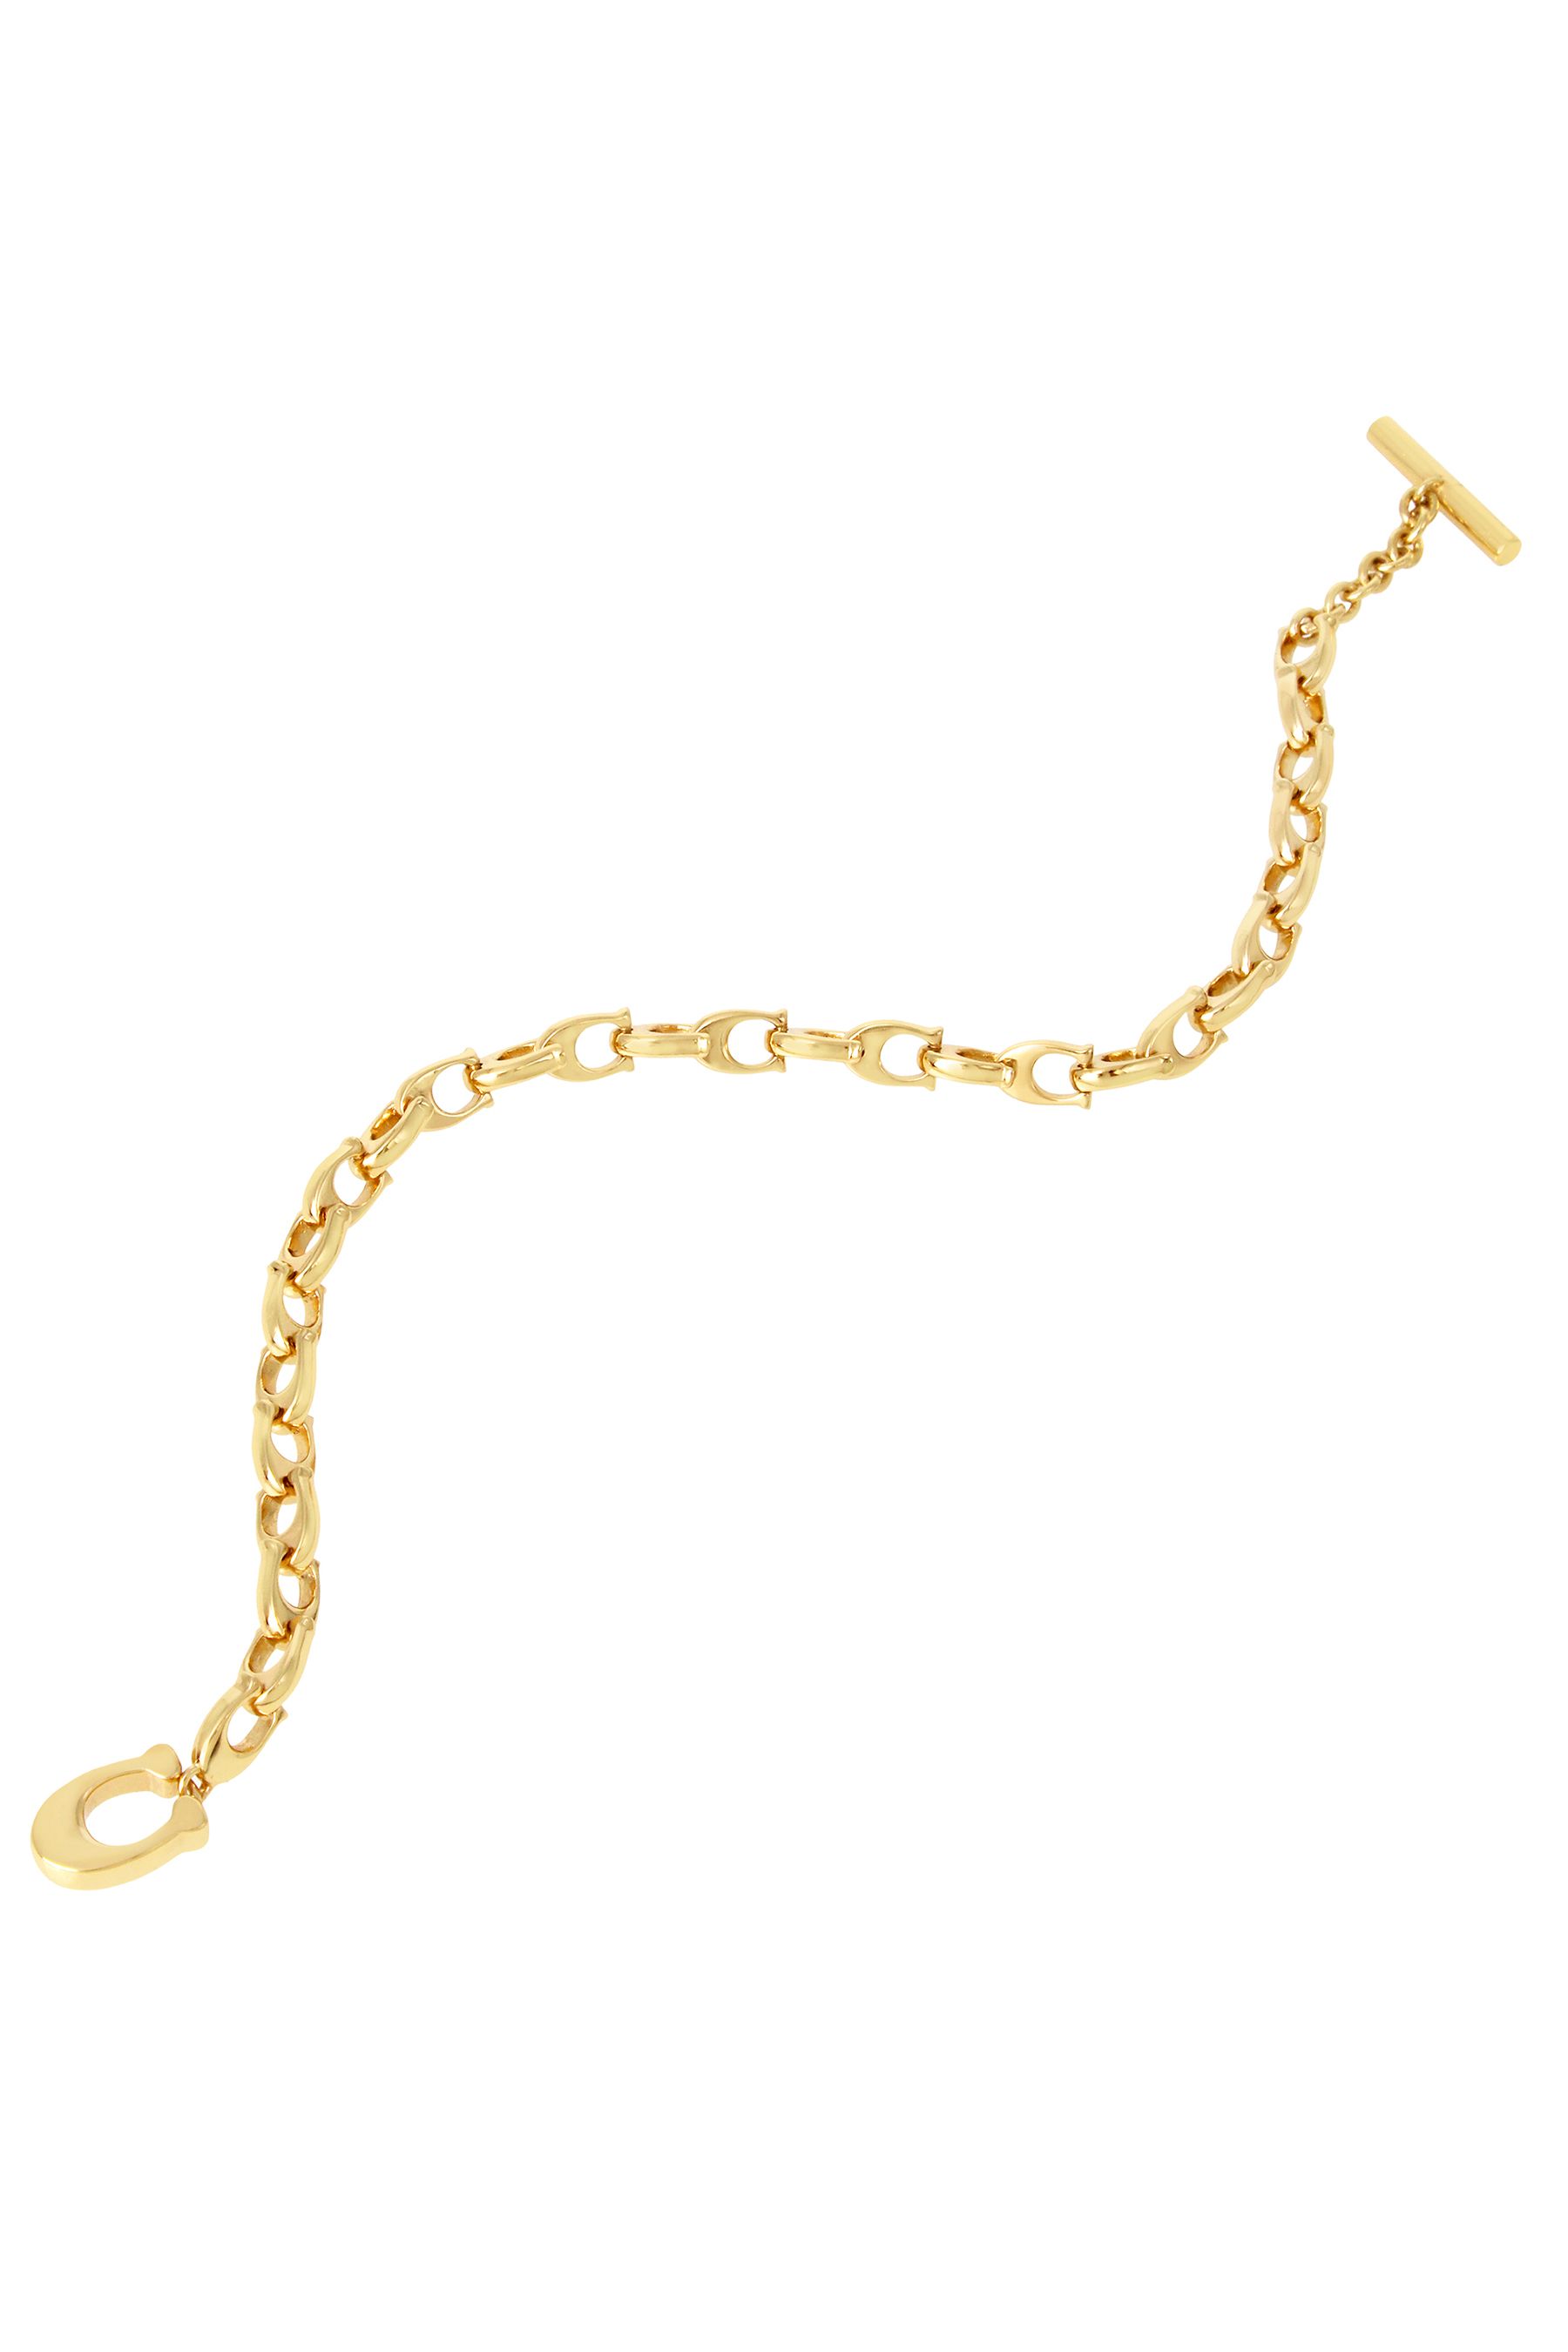 Coach Women's C Crystal Slider Bracelet - Gold/Clear